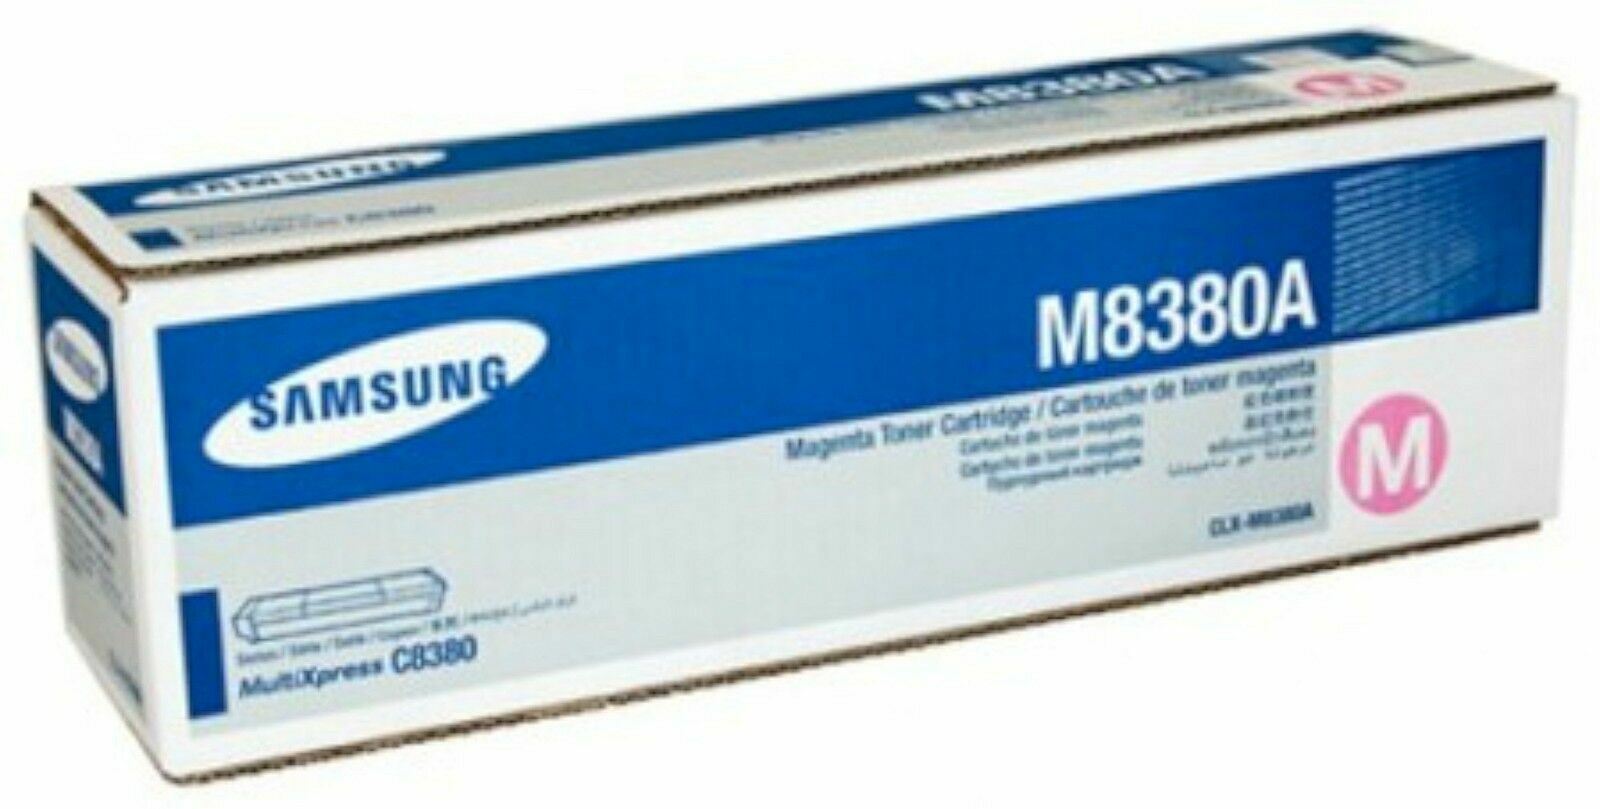 NEW OEM Samsung CLX-M8380A Magenta Toner Cartridge for CLX-8380ND Series Printer